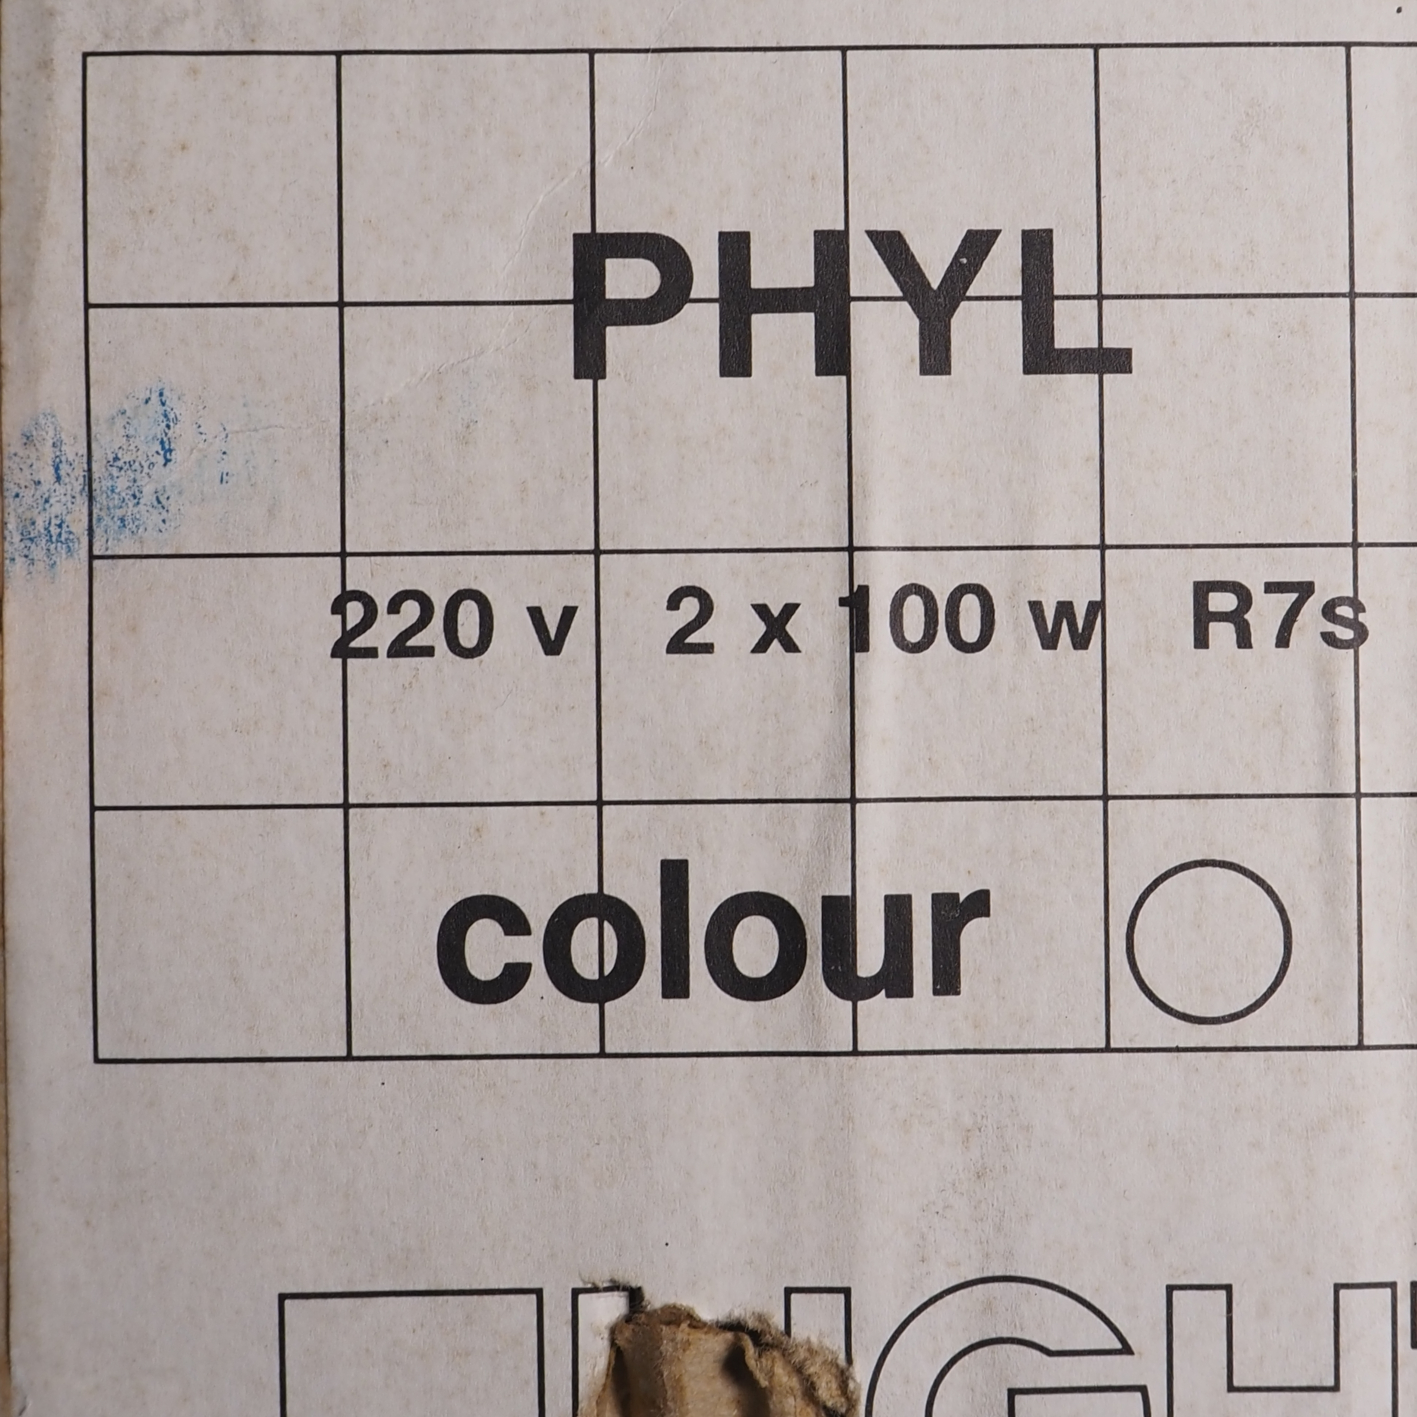 Wall Light 'Phyl' by Paul Gillis for LIGHT